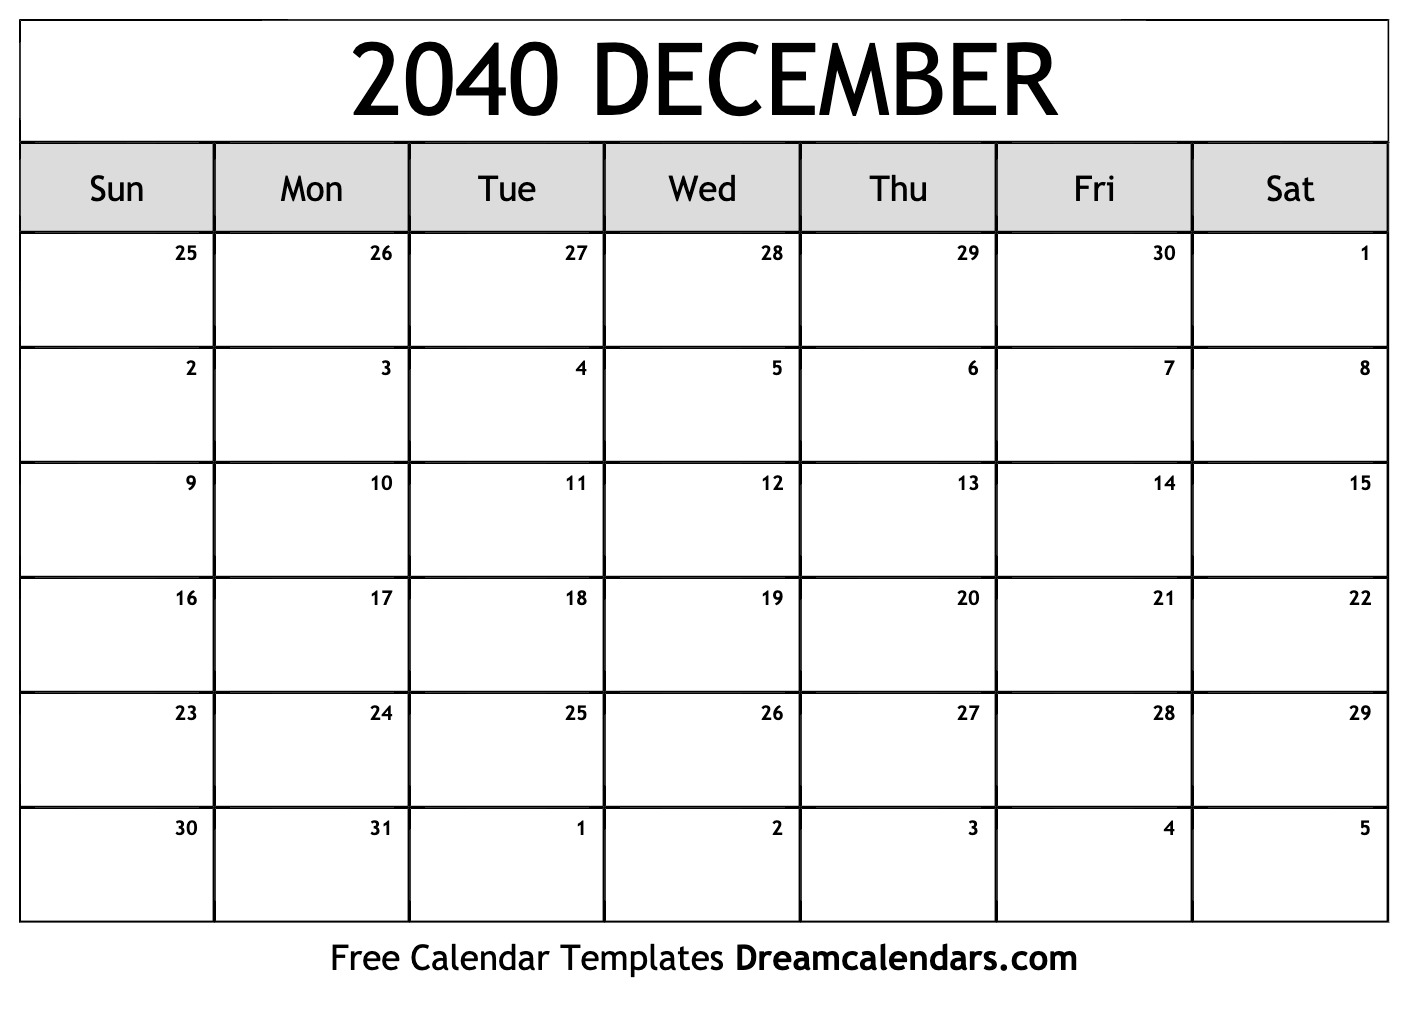 StubHub Center Monthly Calendar: December